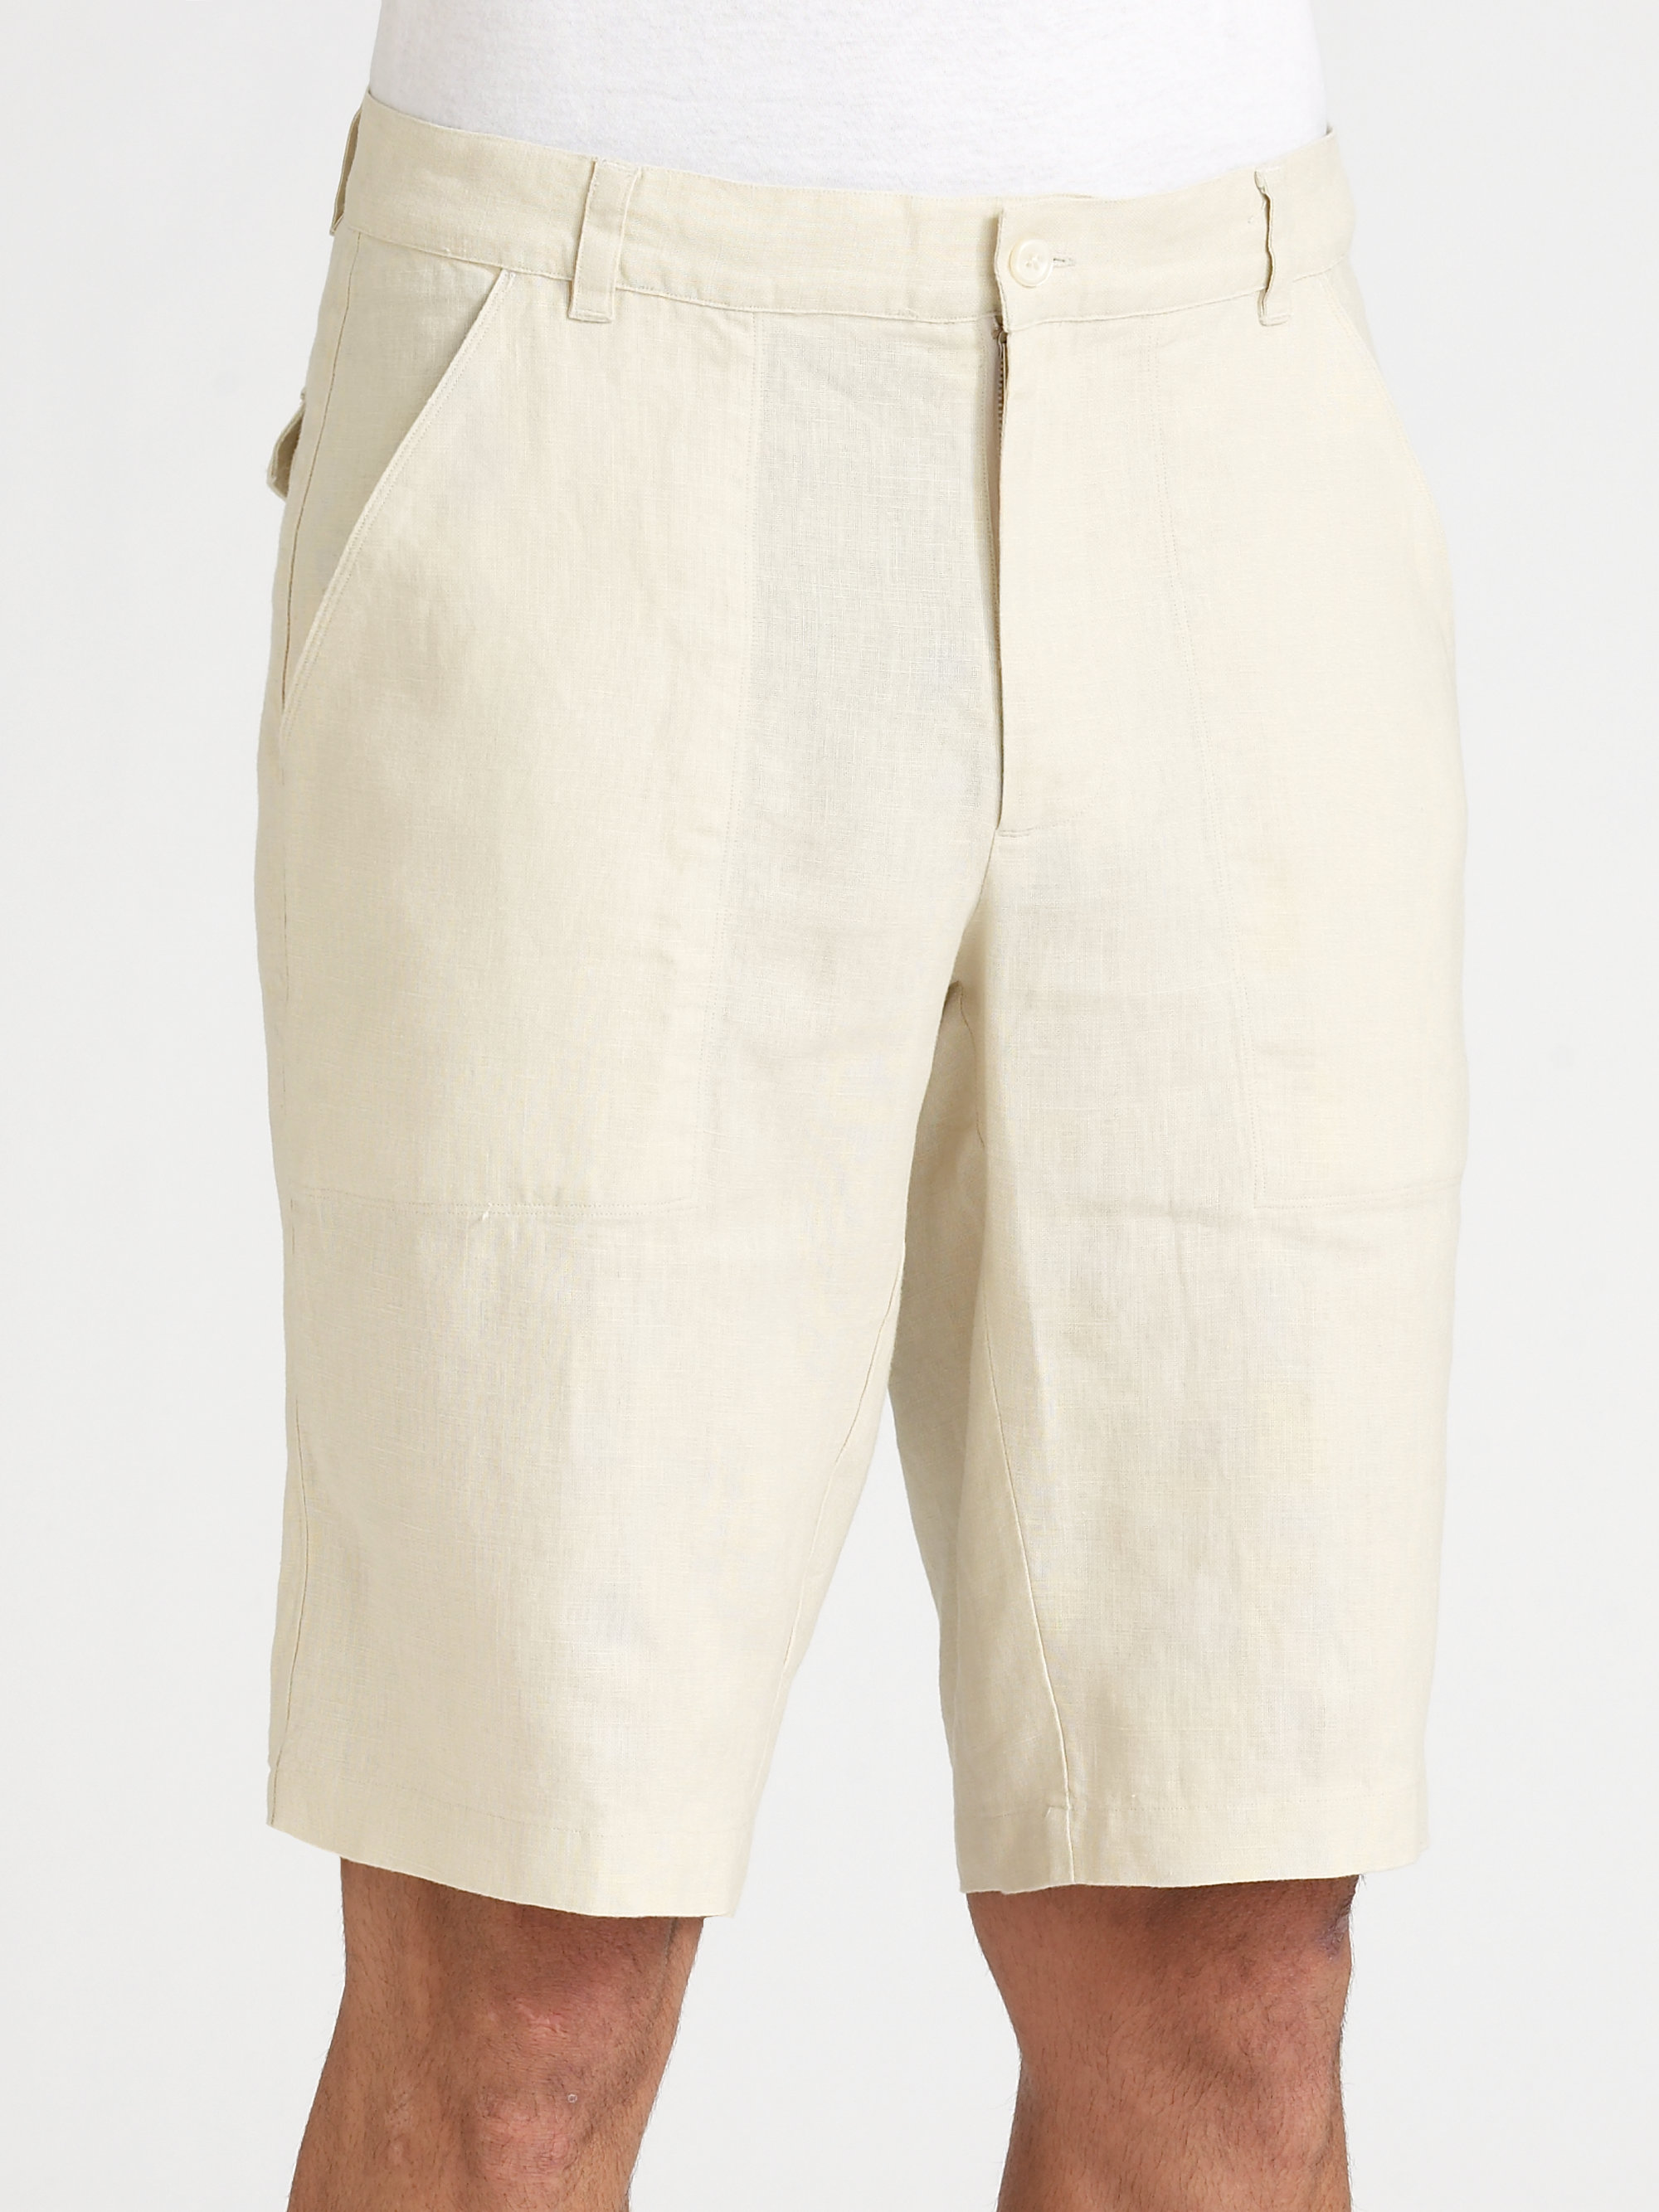 Saks Fifth Avenue Linen Shorts in Khaki (Natural) for Men - Lyst